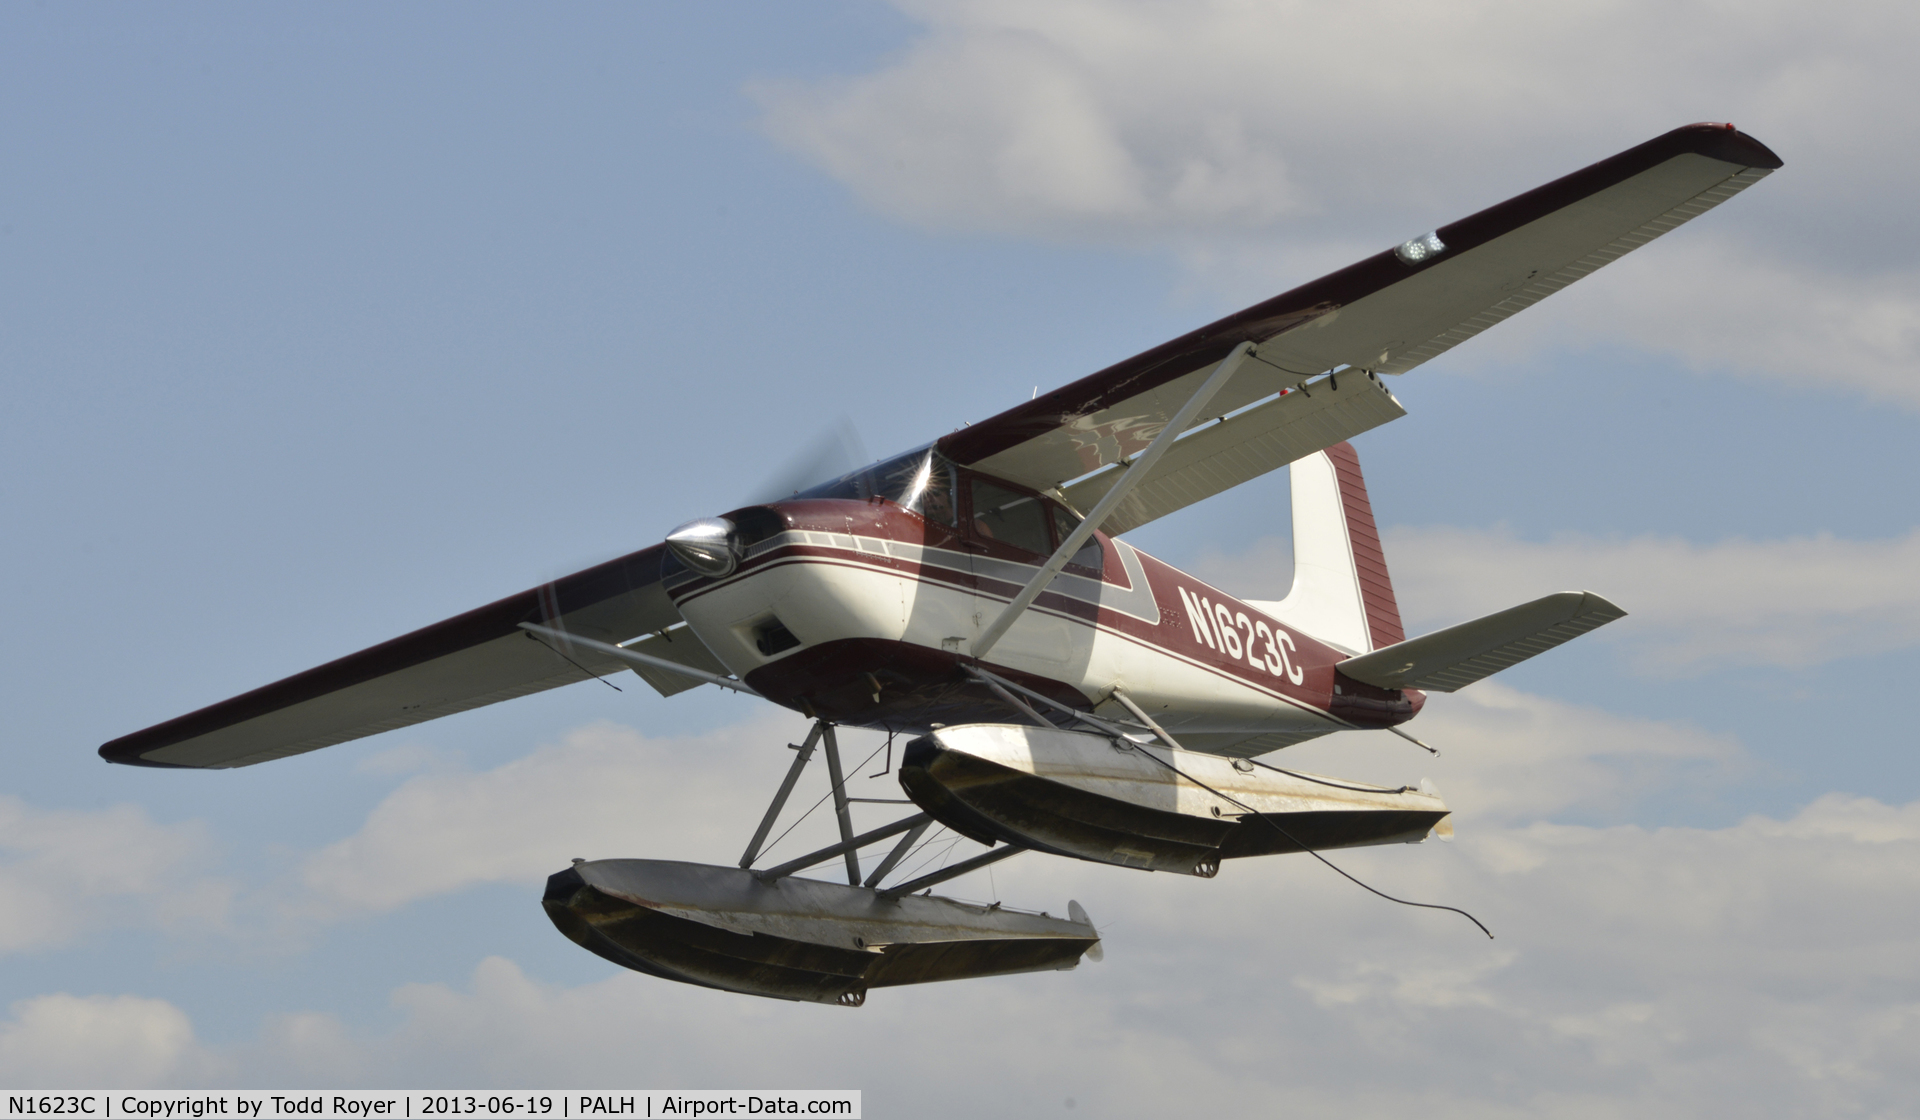 N1623C, Cessna 180 C/N 30323, Landing at Lake Hood